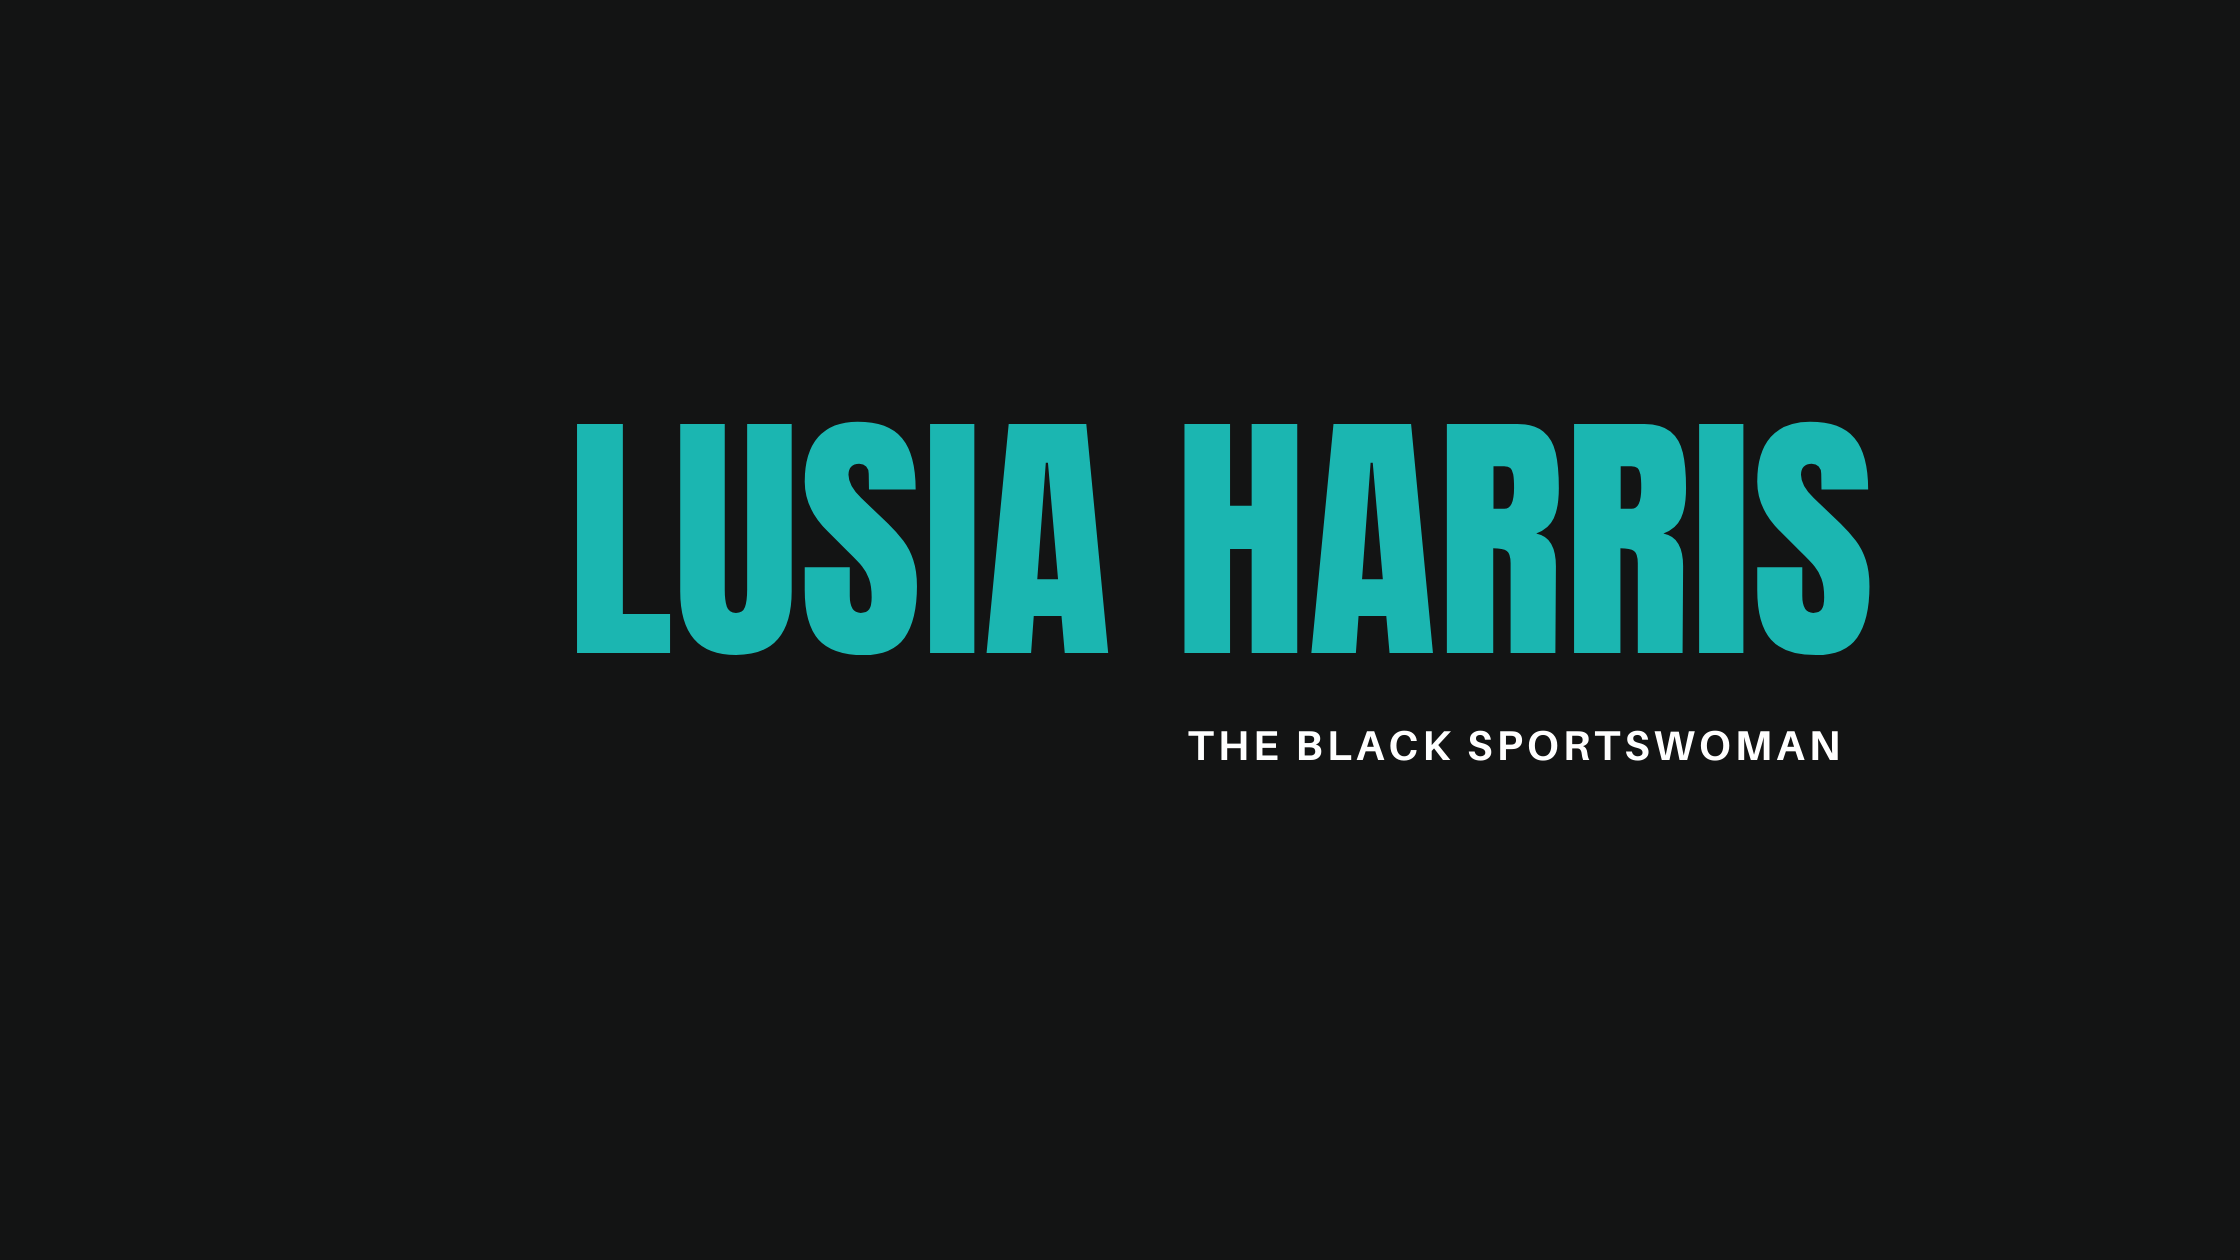 The impact of Lusia Harris on Team USA